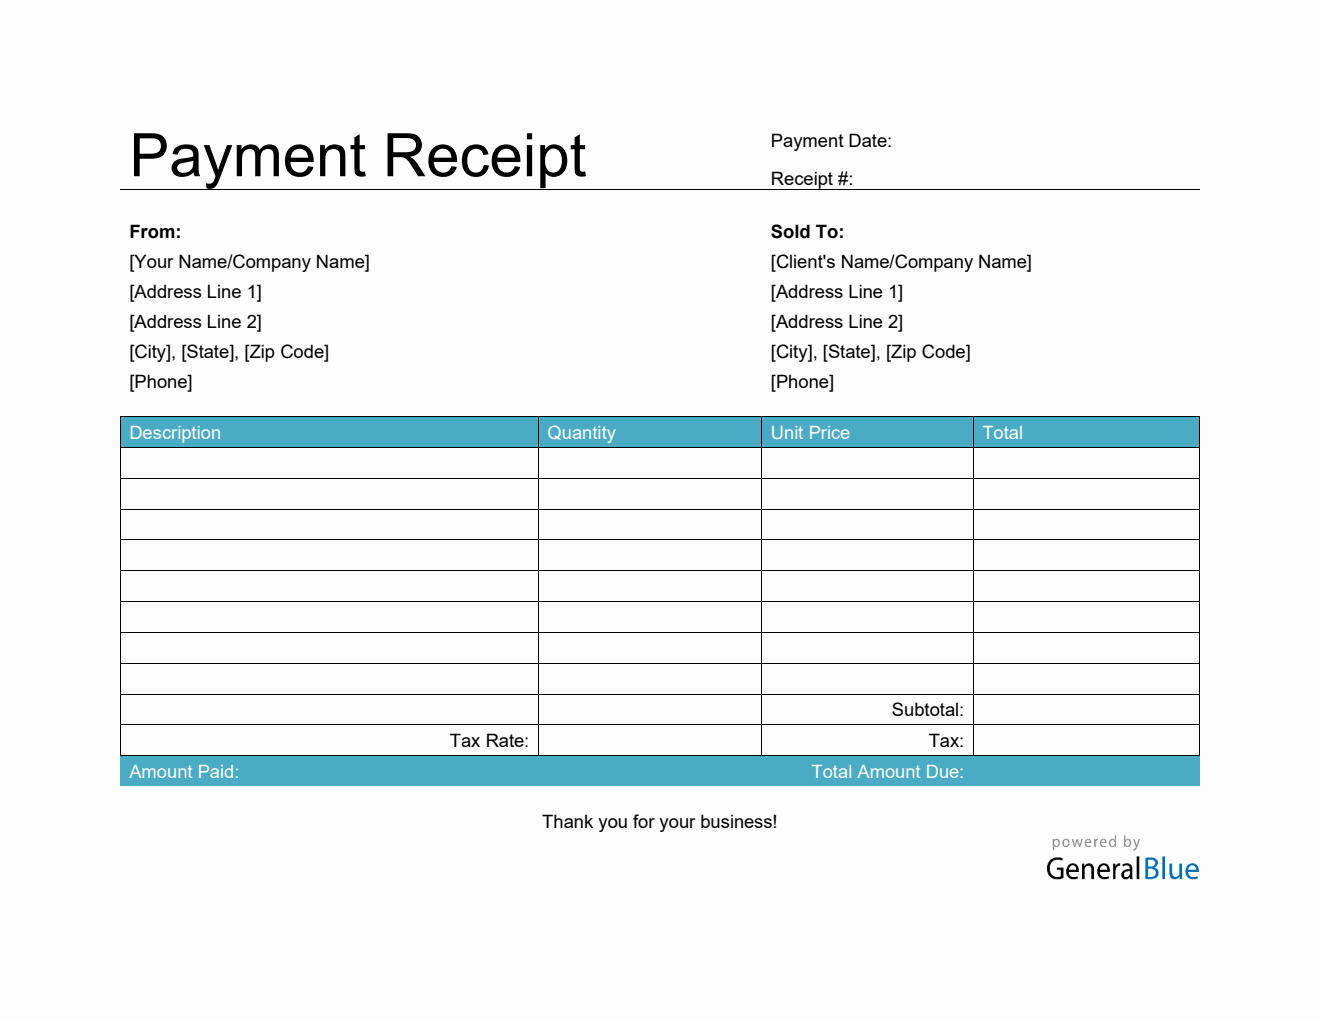 Payment Receipt Template in Word (Aqua)